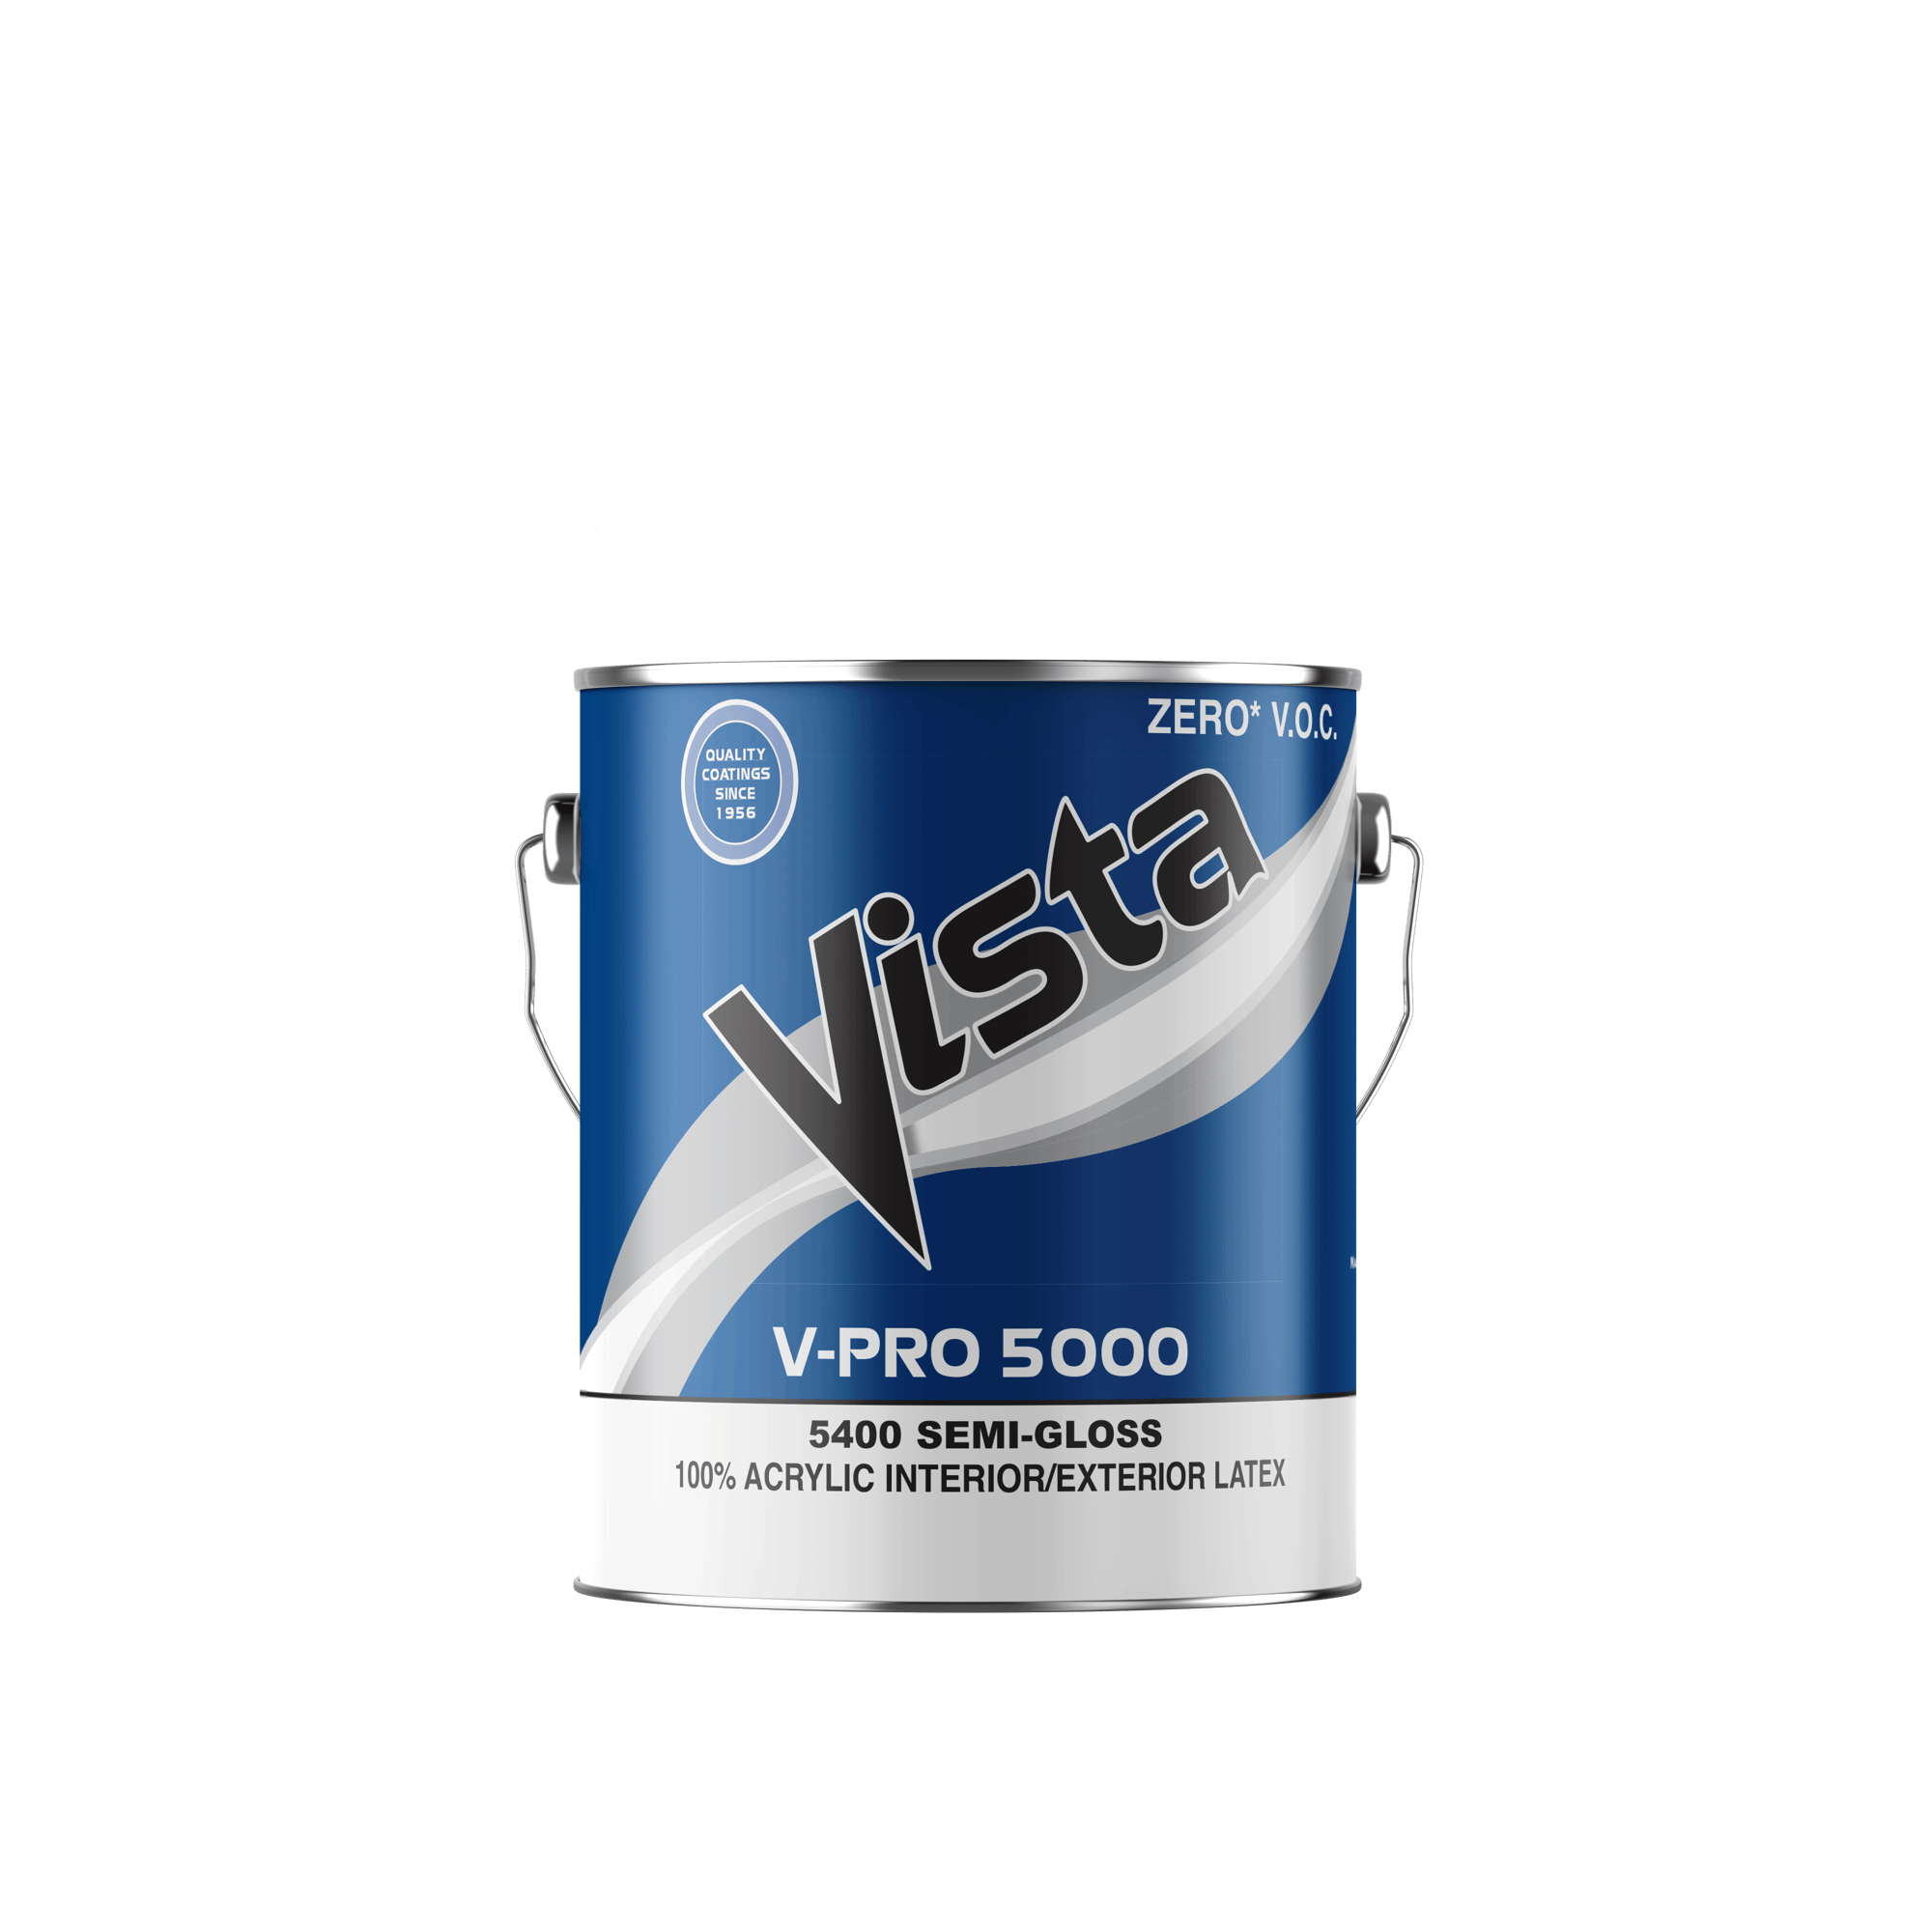 5400 V-PRO 5000 Semi-Gloss